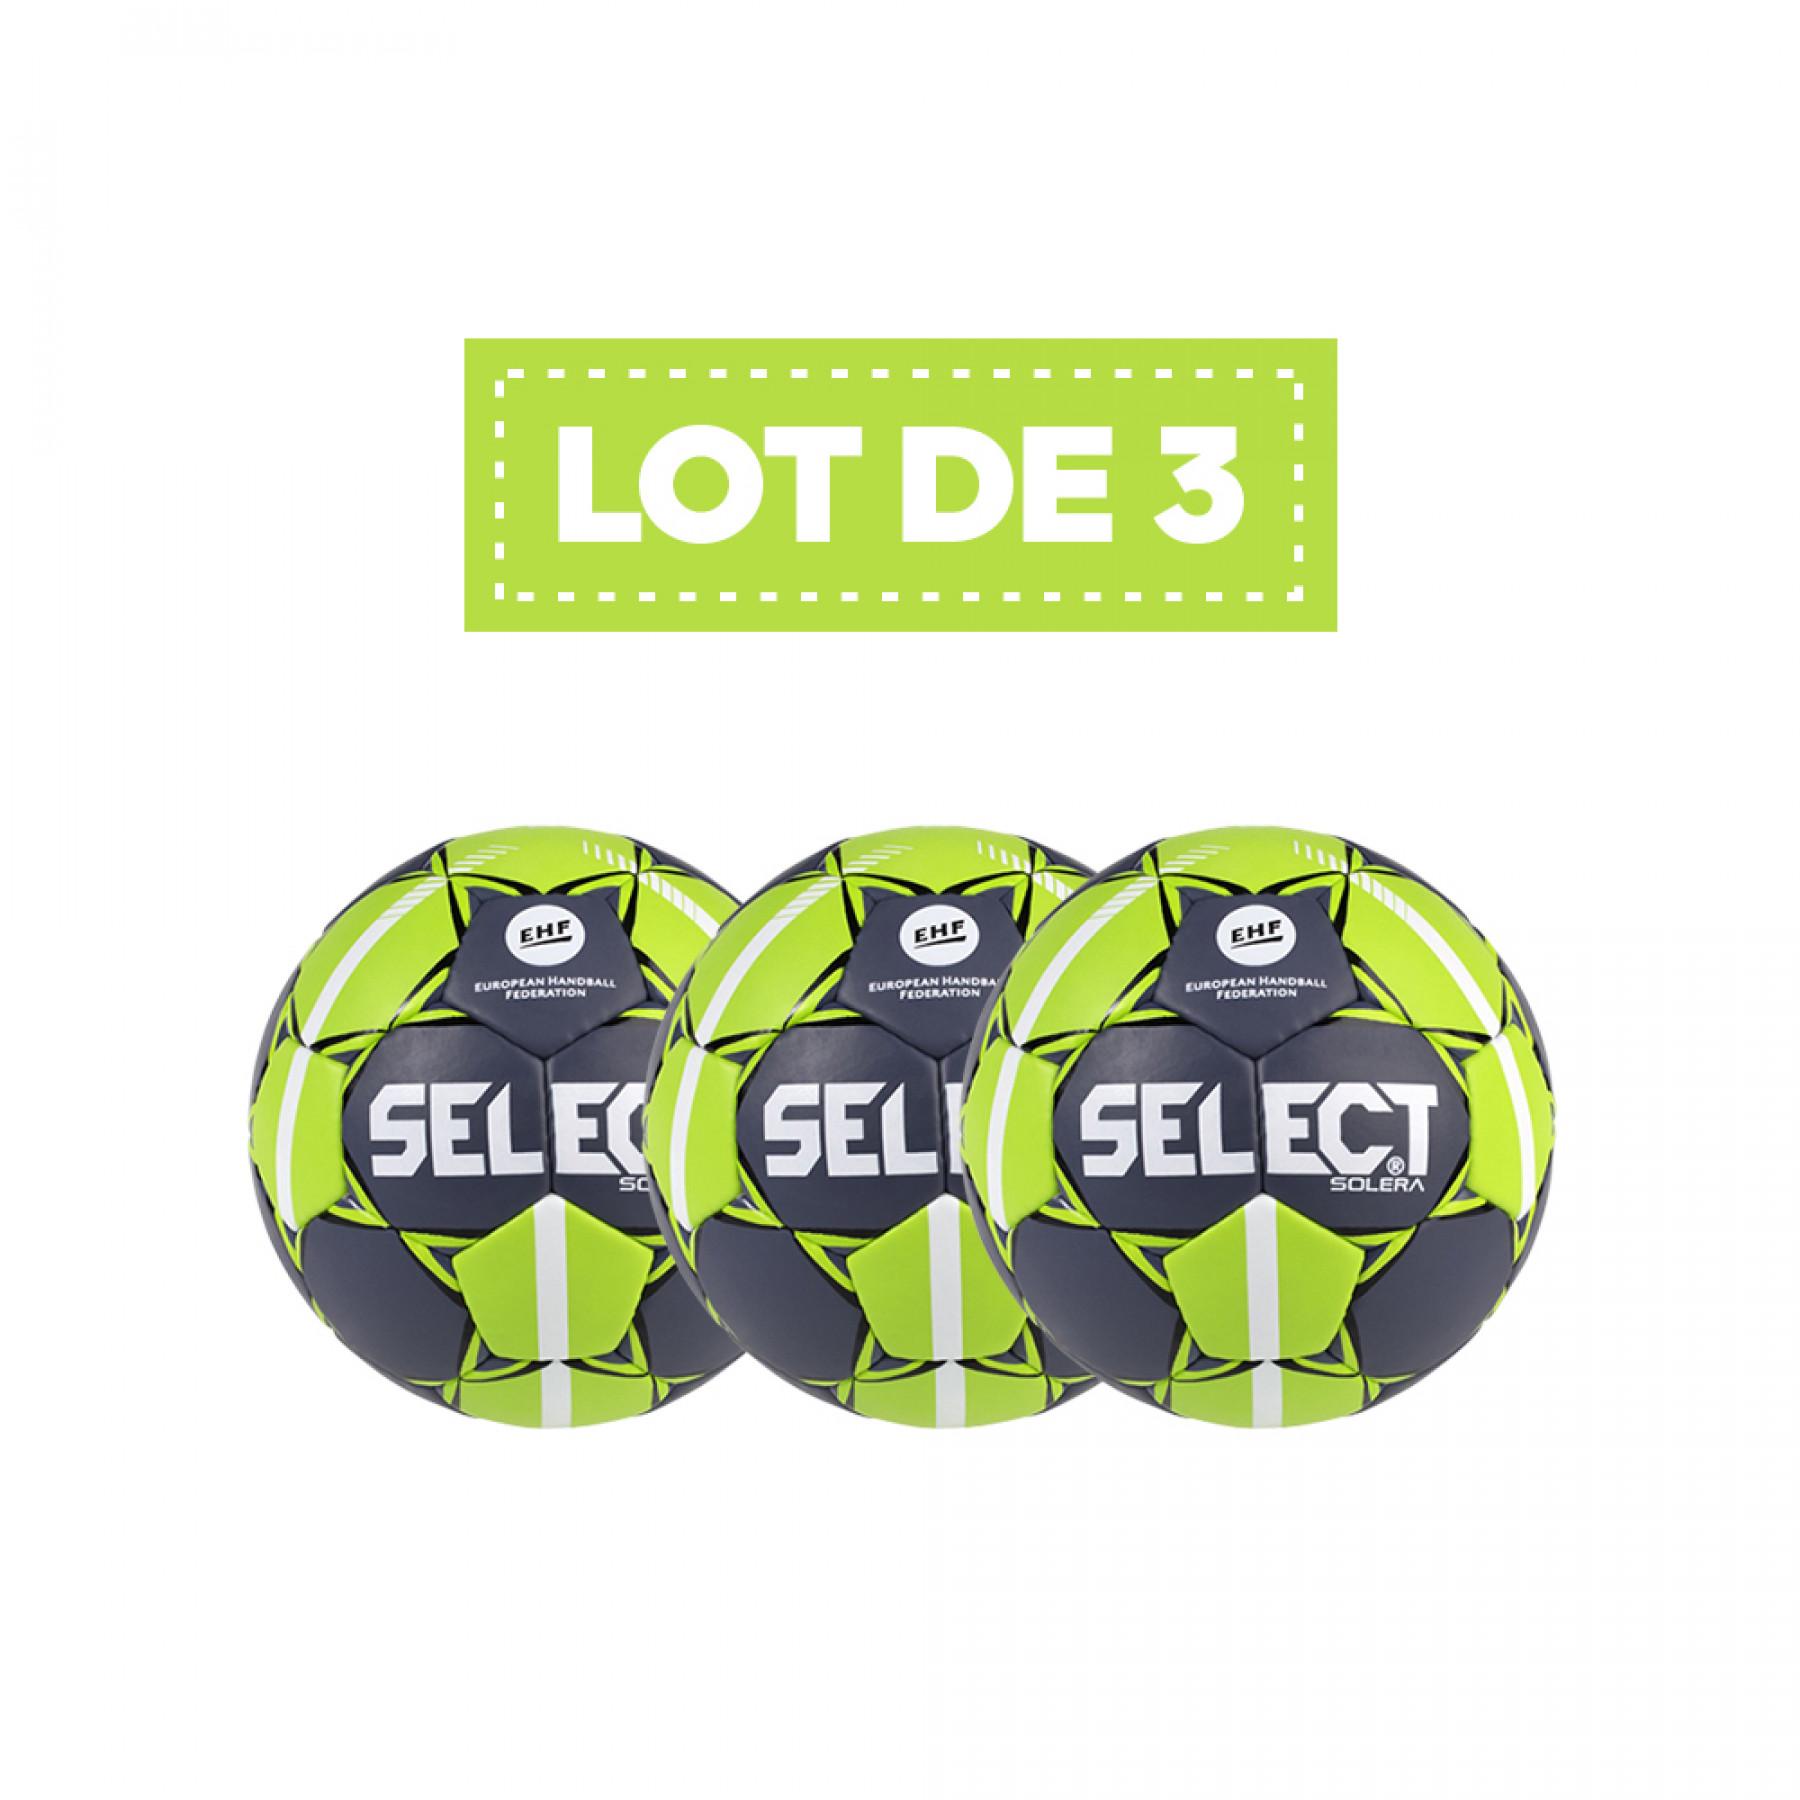 Set van 3 ballonnen Select HB Solera